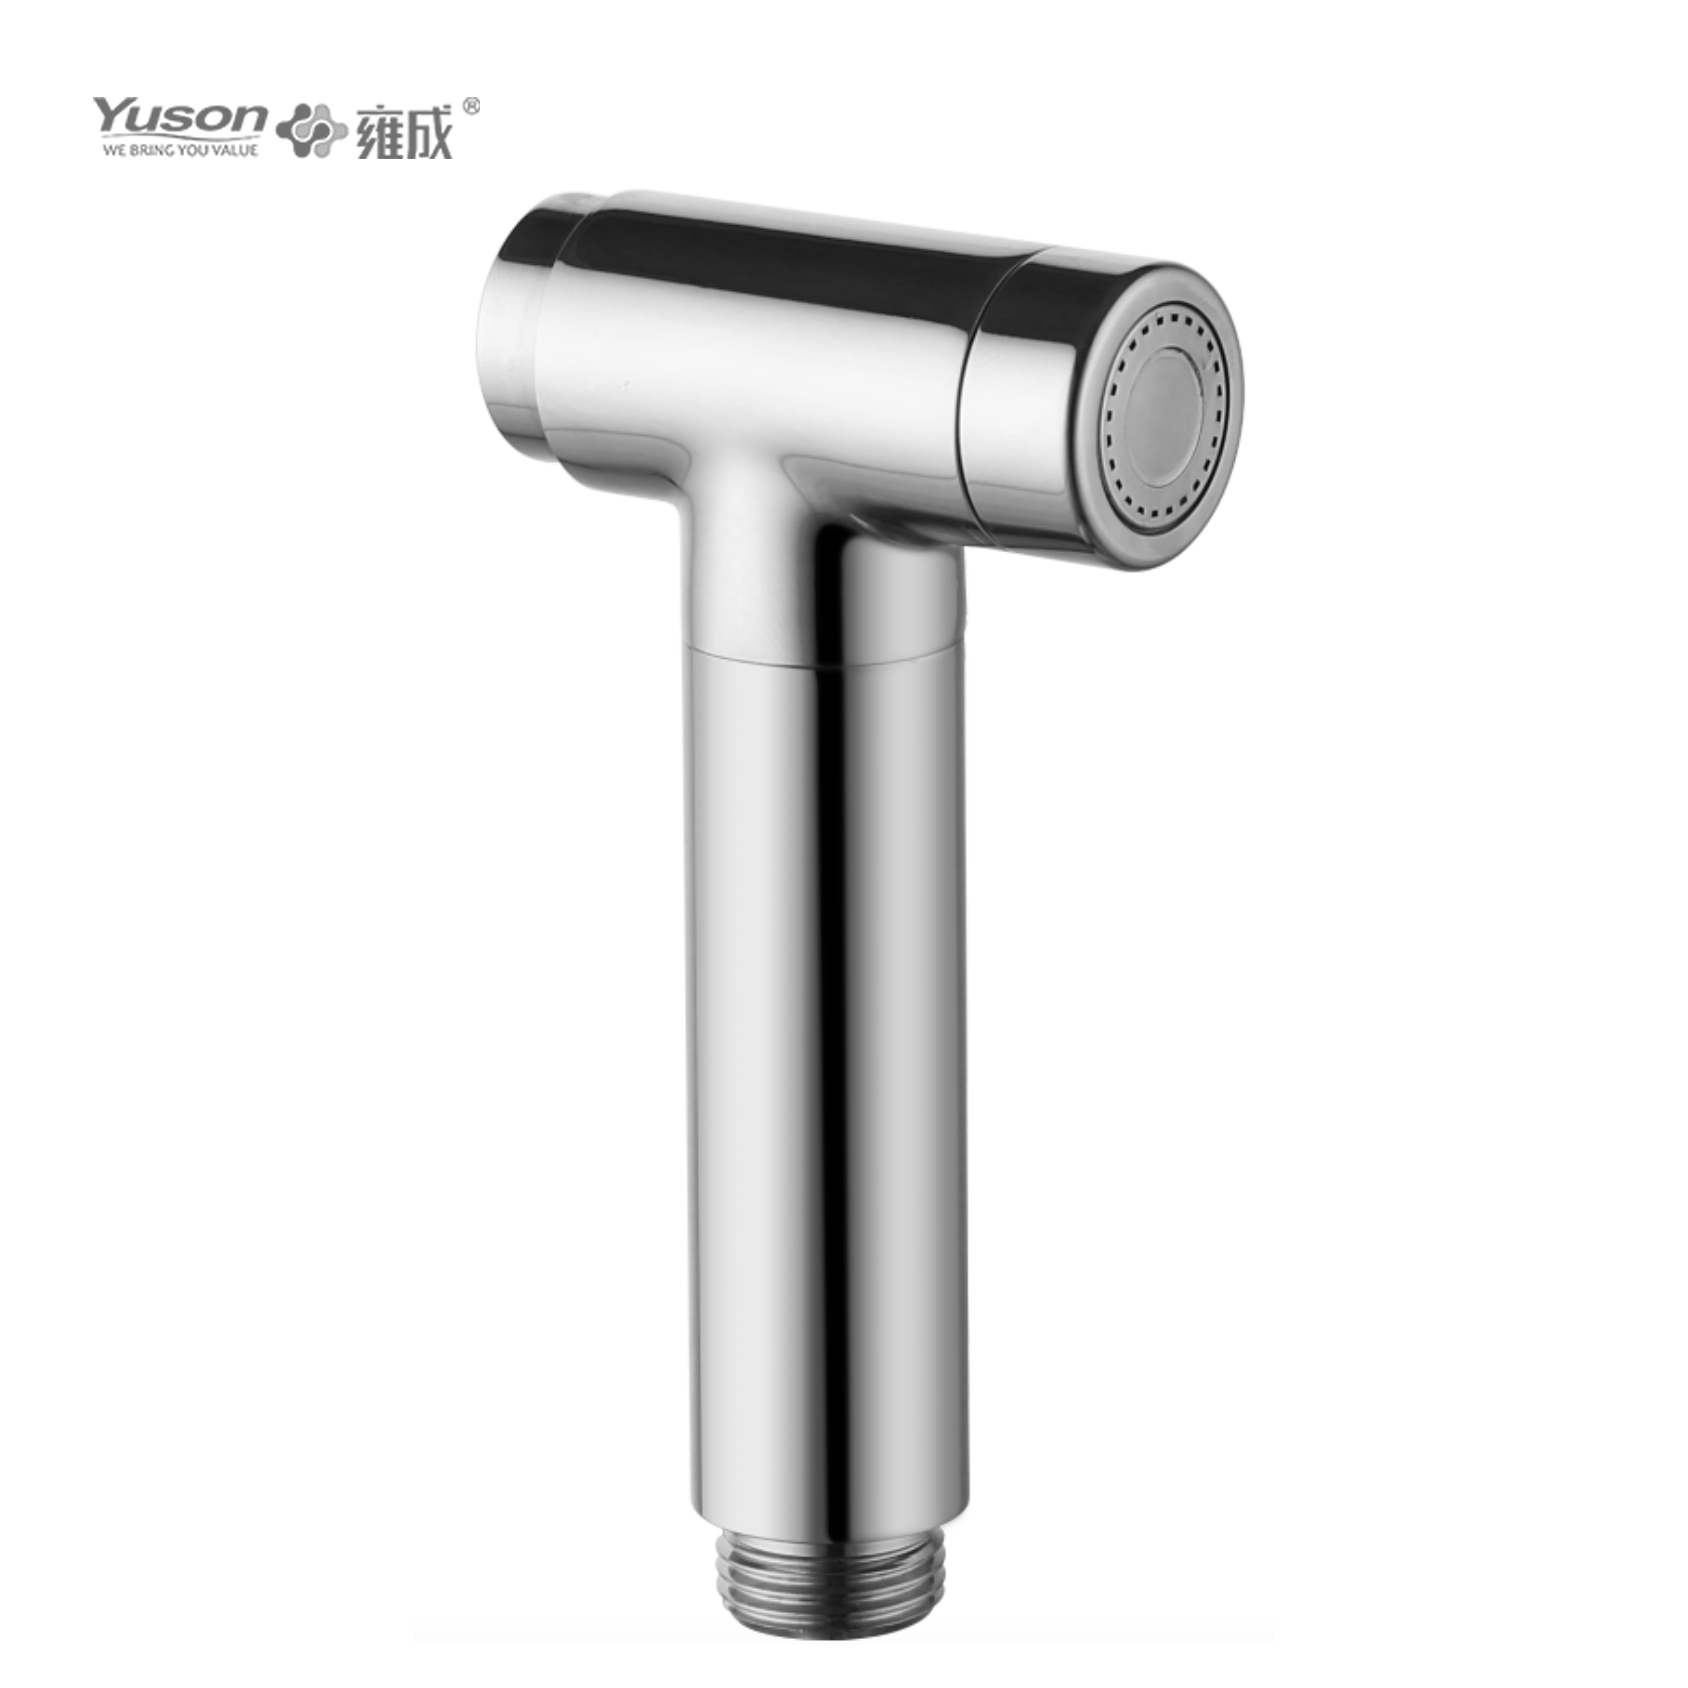 YS36718	Stainless Steel 304 toilet bidet sprayer set with hot and cold mixing valve, toilet bidet sprayer holder